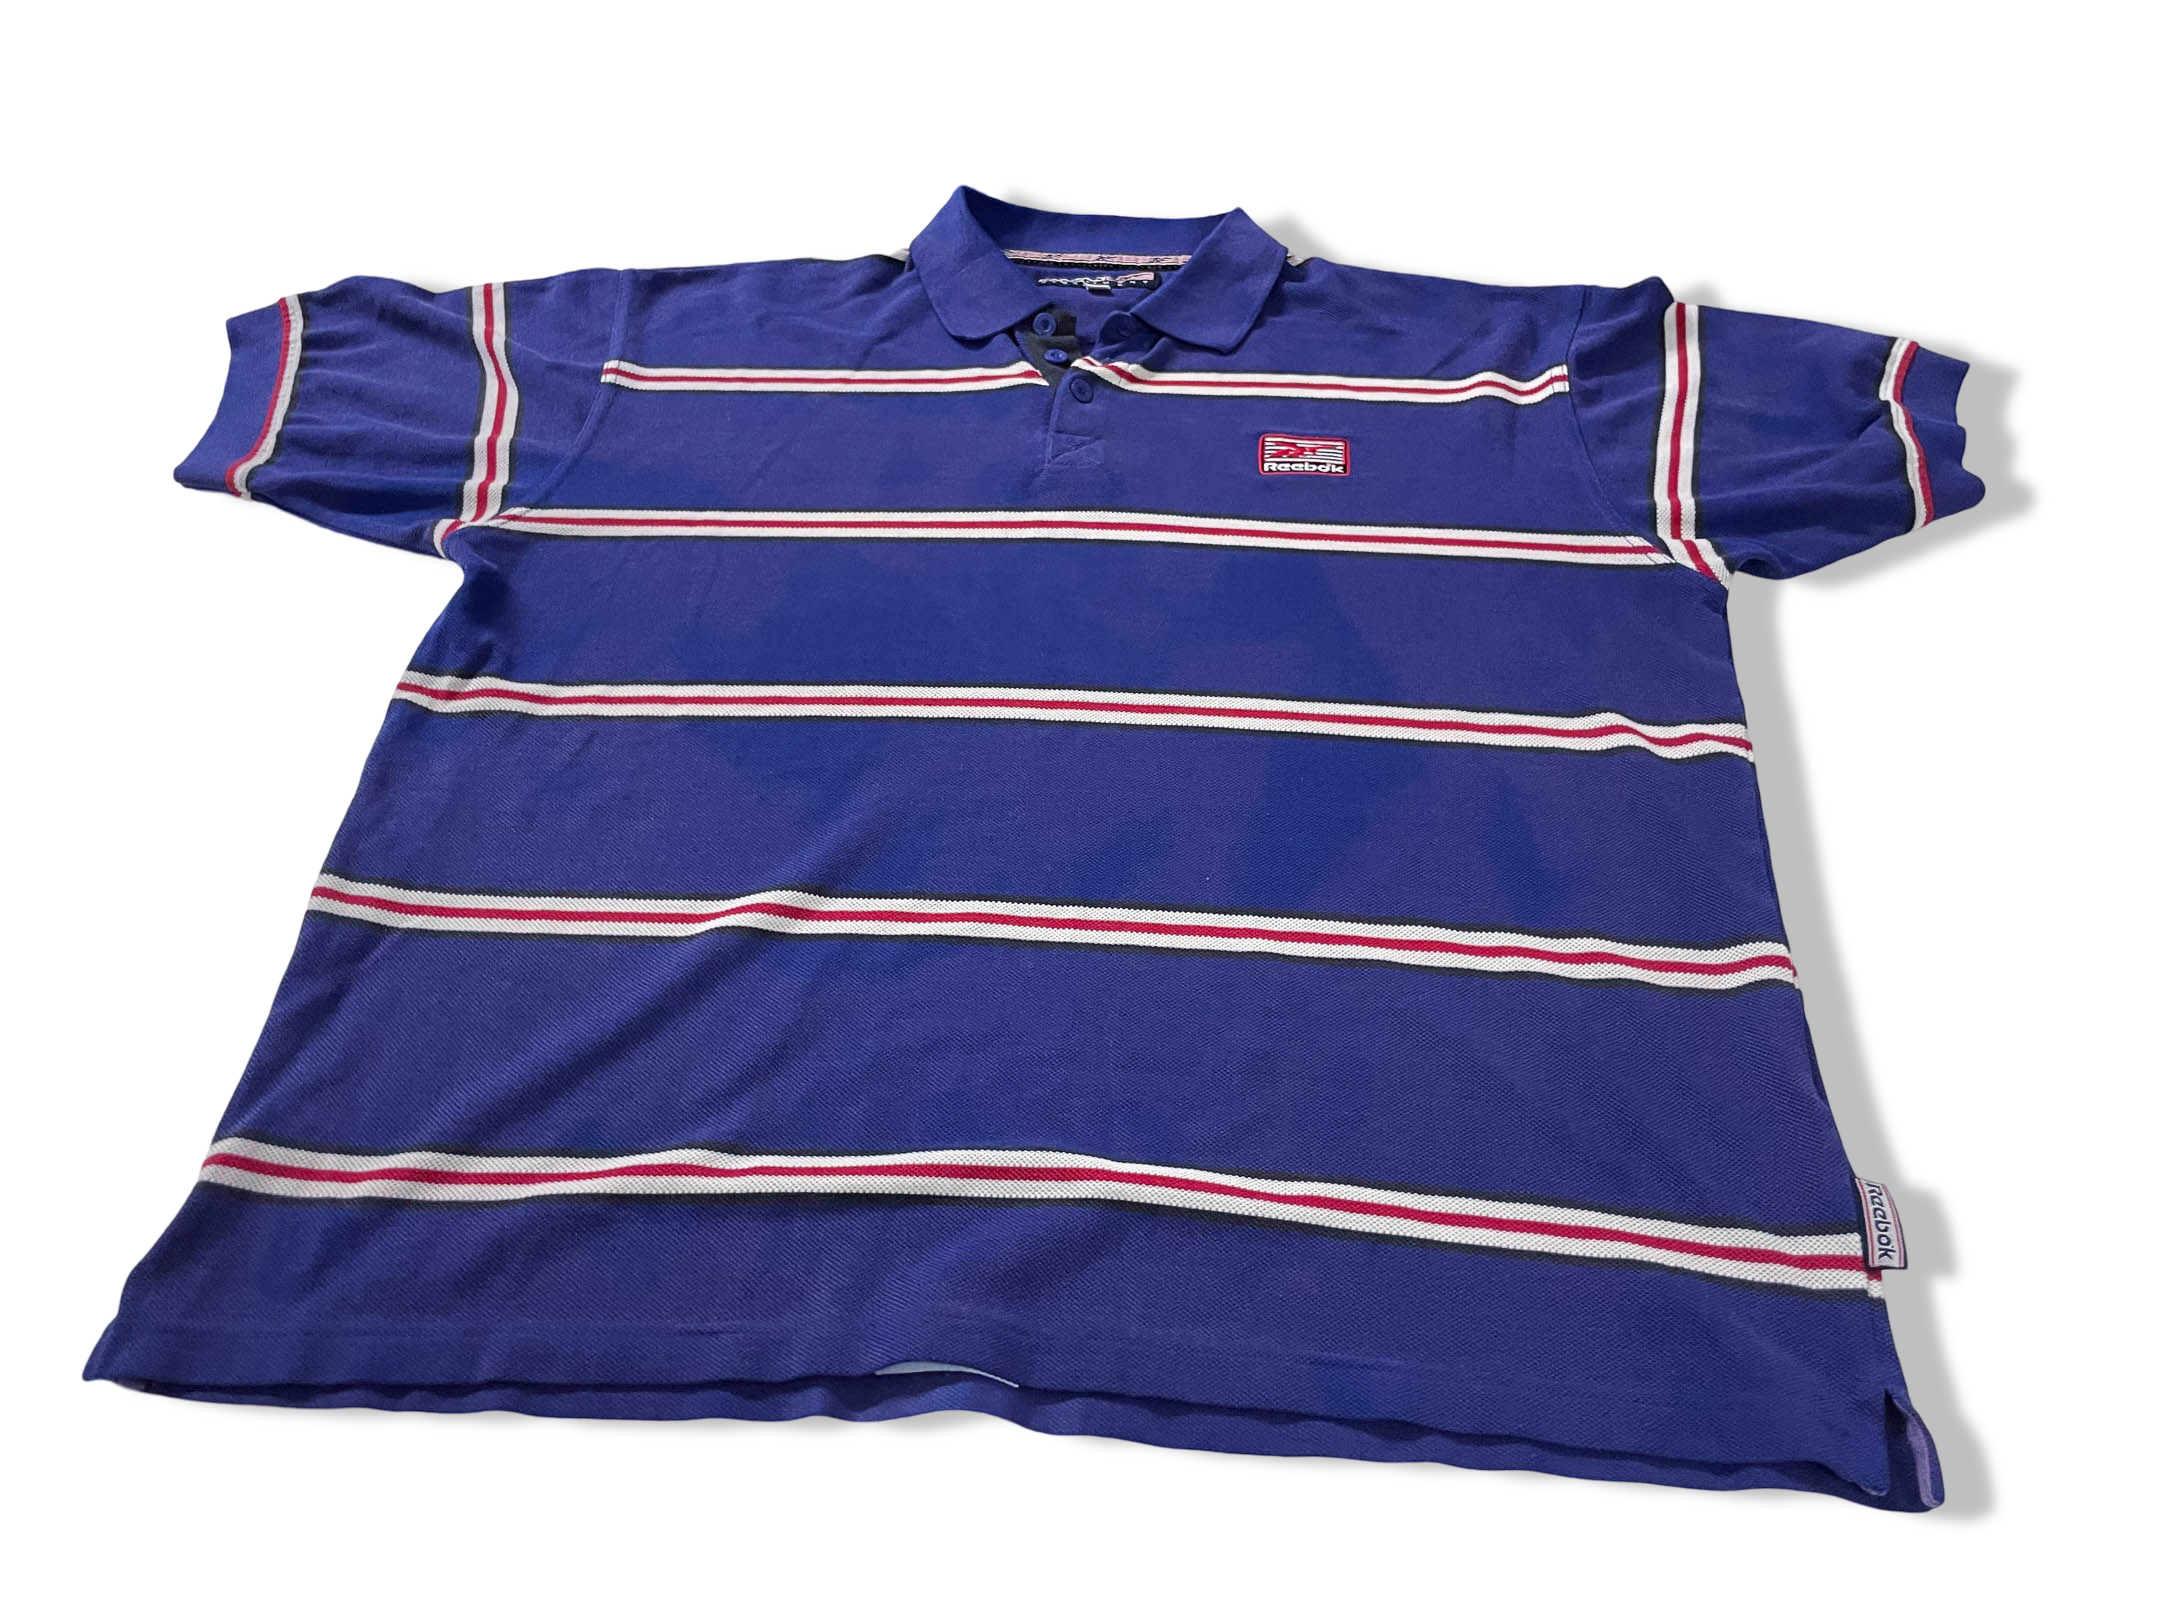 Vintage Men's Reebok Athletics Dept. Blue stripe polo shirt in M|L28 W20|SKU 4140